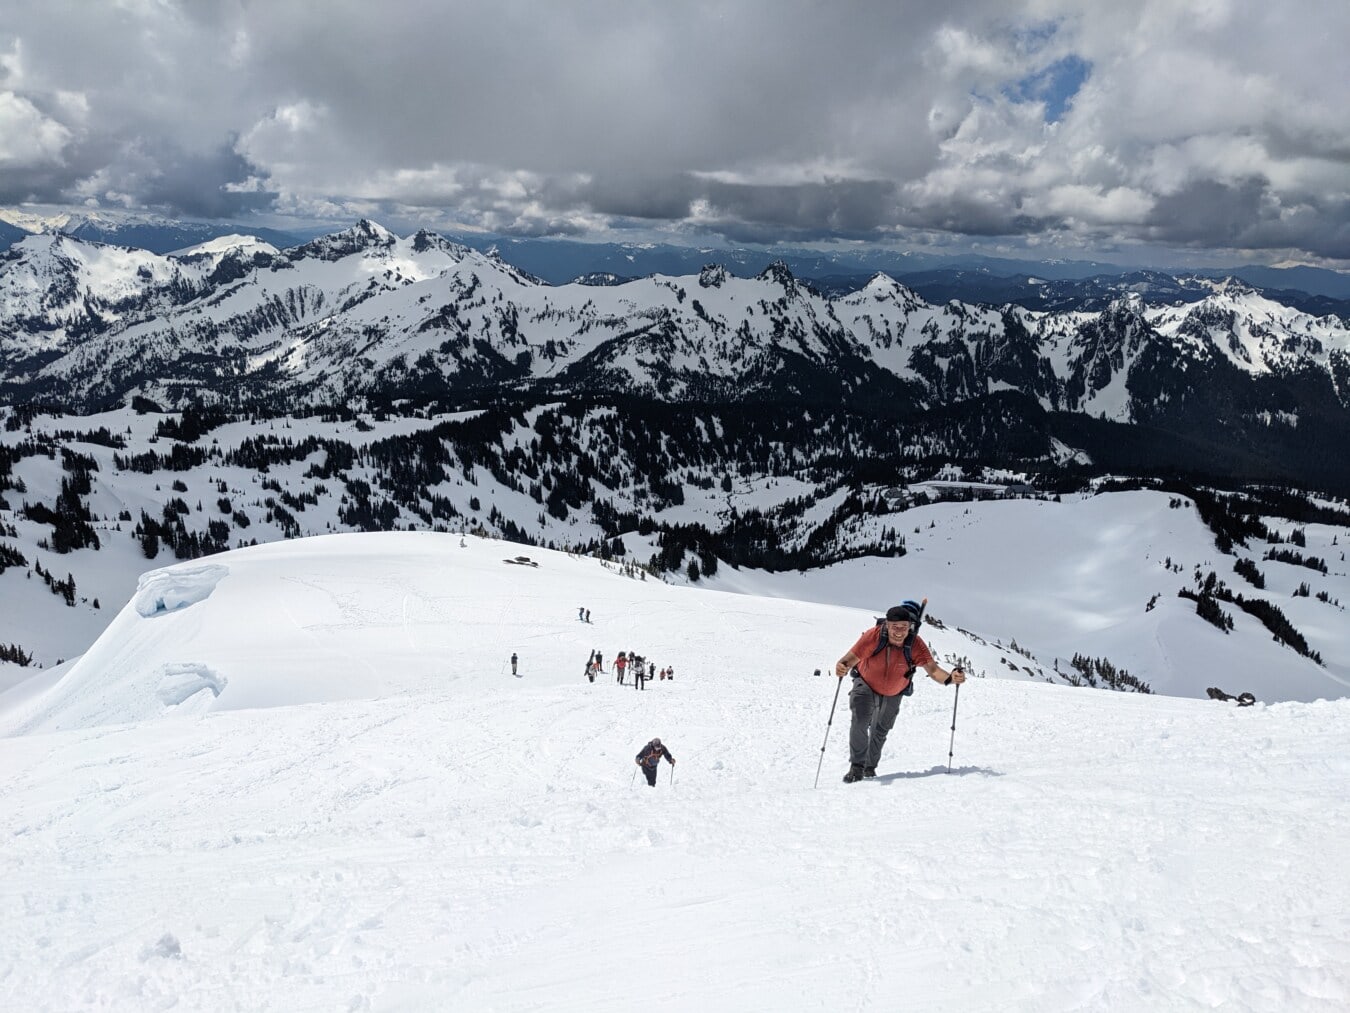 skiing, mountain climber, sport, snowy, mountain peak, mountains, slope, landscape, cold, mountain